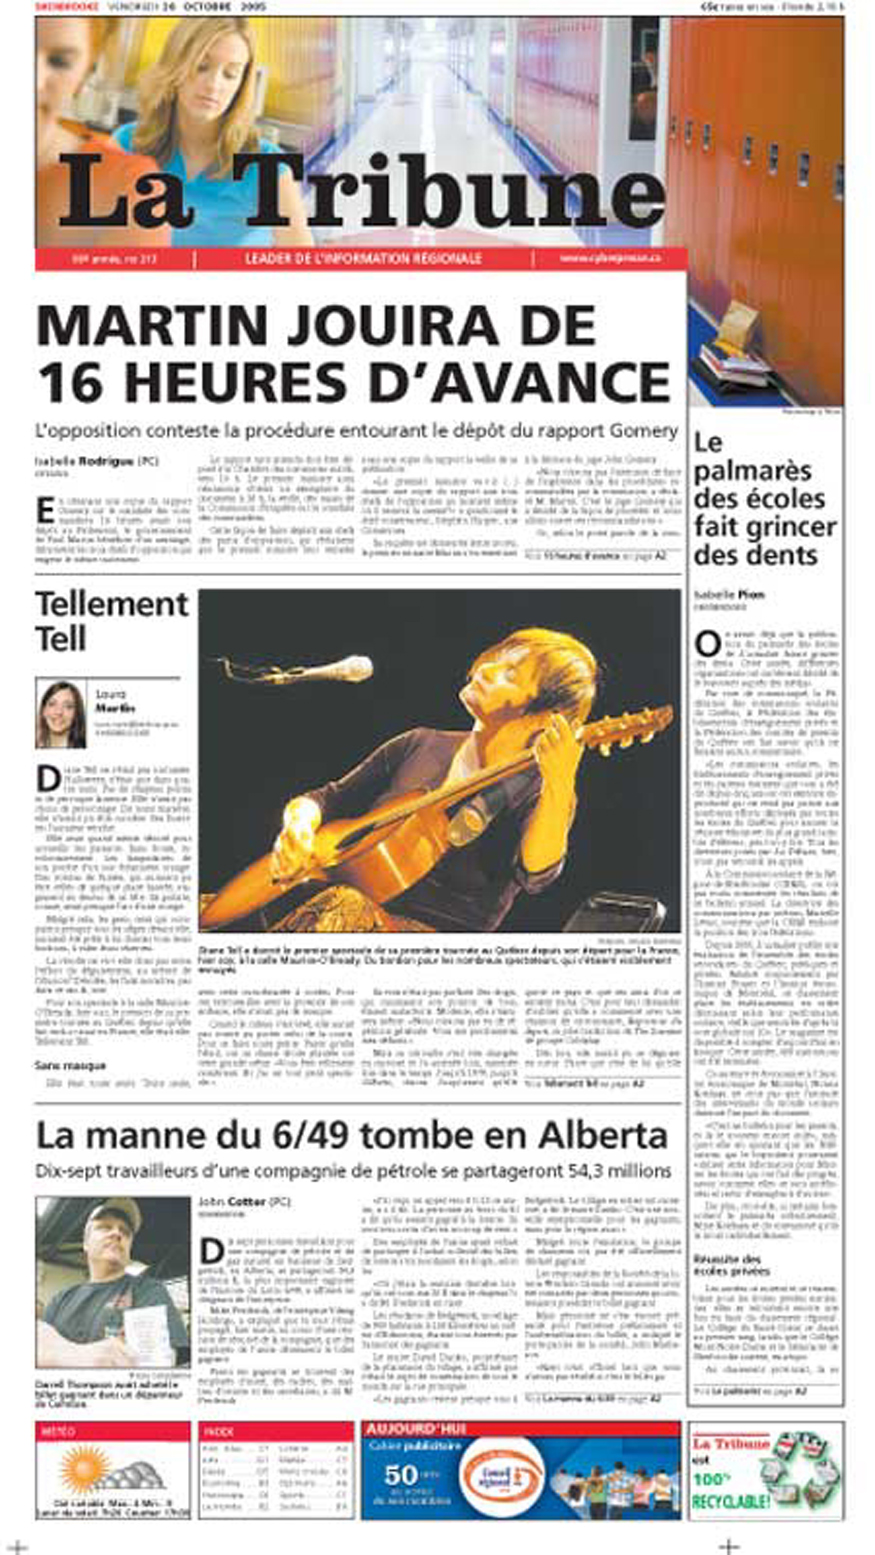 La Tribune – En concert